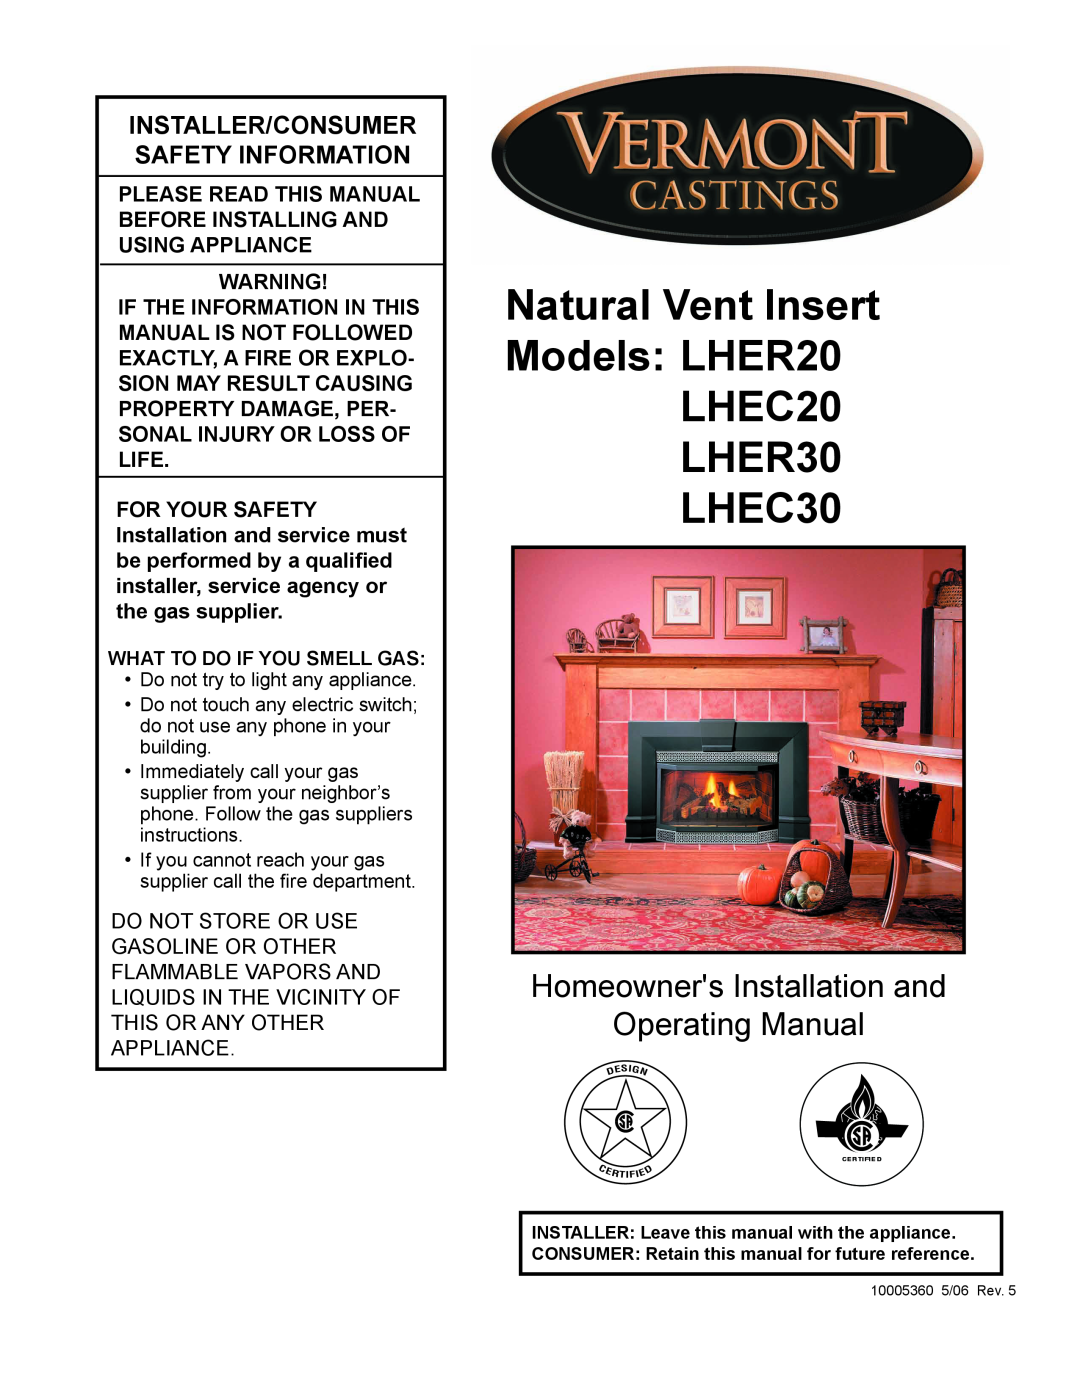 Vermont Casting manual Natural Vent Insert Models LHER20 LHEC20 LHER30 LHEC30, Installer/Consumer Safety Information 